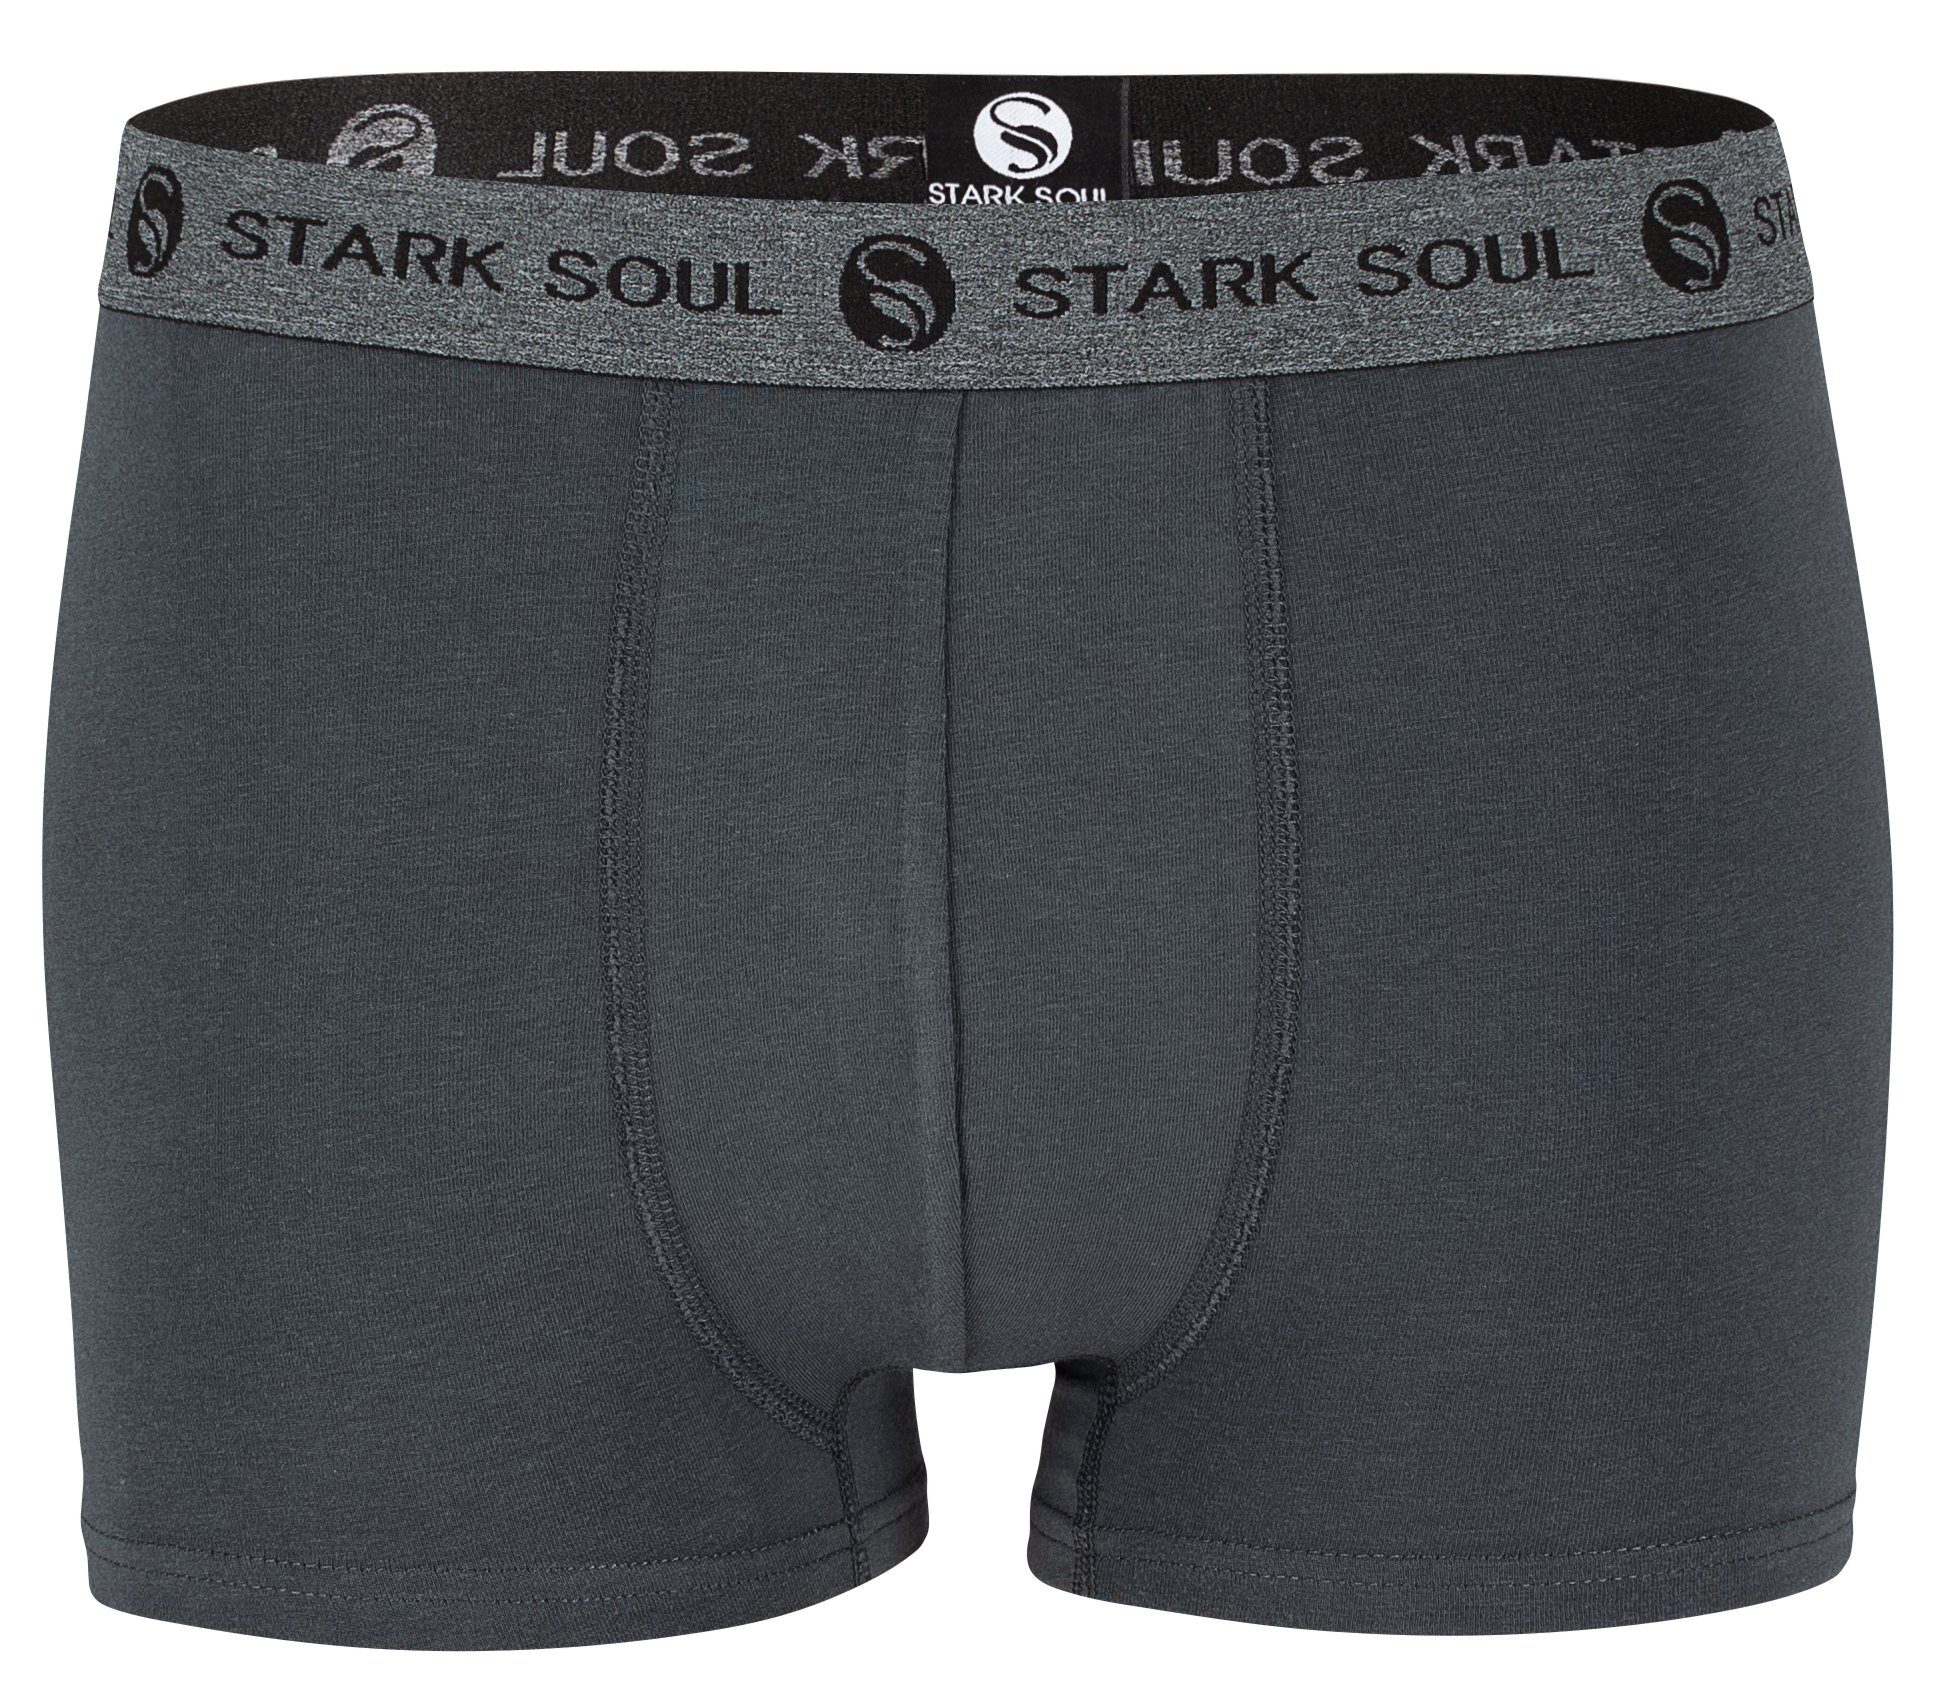 Stark Soul® Boxershorts Herren 6er-Pack Pack, Hipster 6er Gemischt Boxershorts, im Baumwoll-Unterhosen